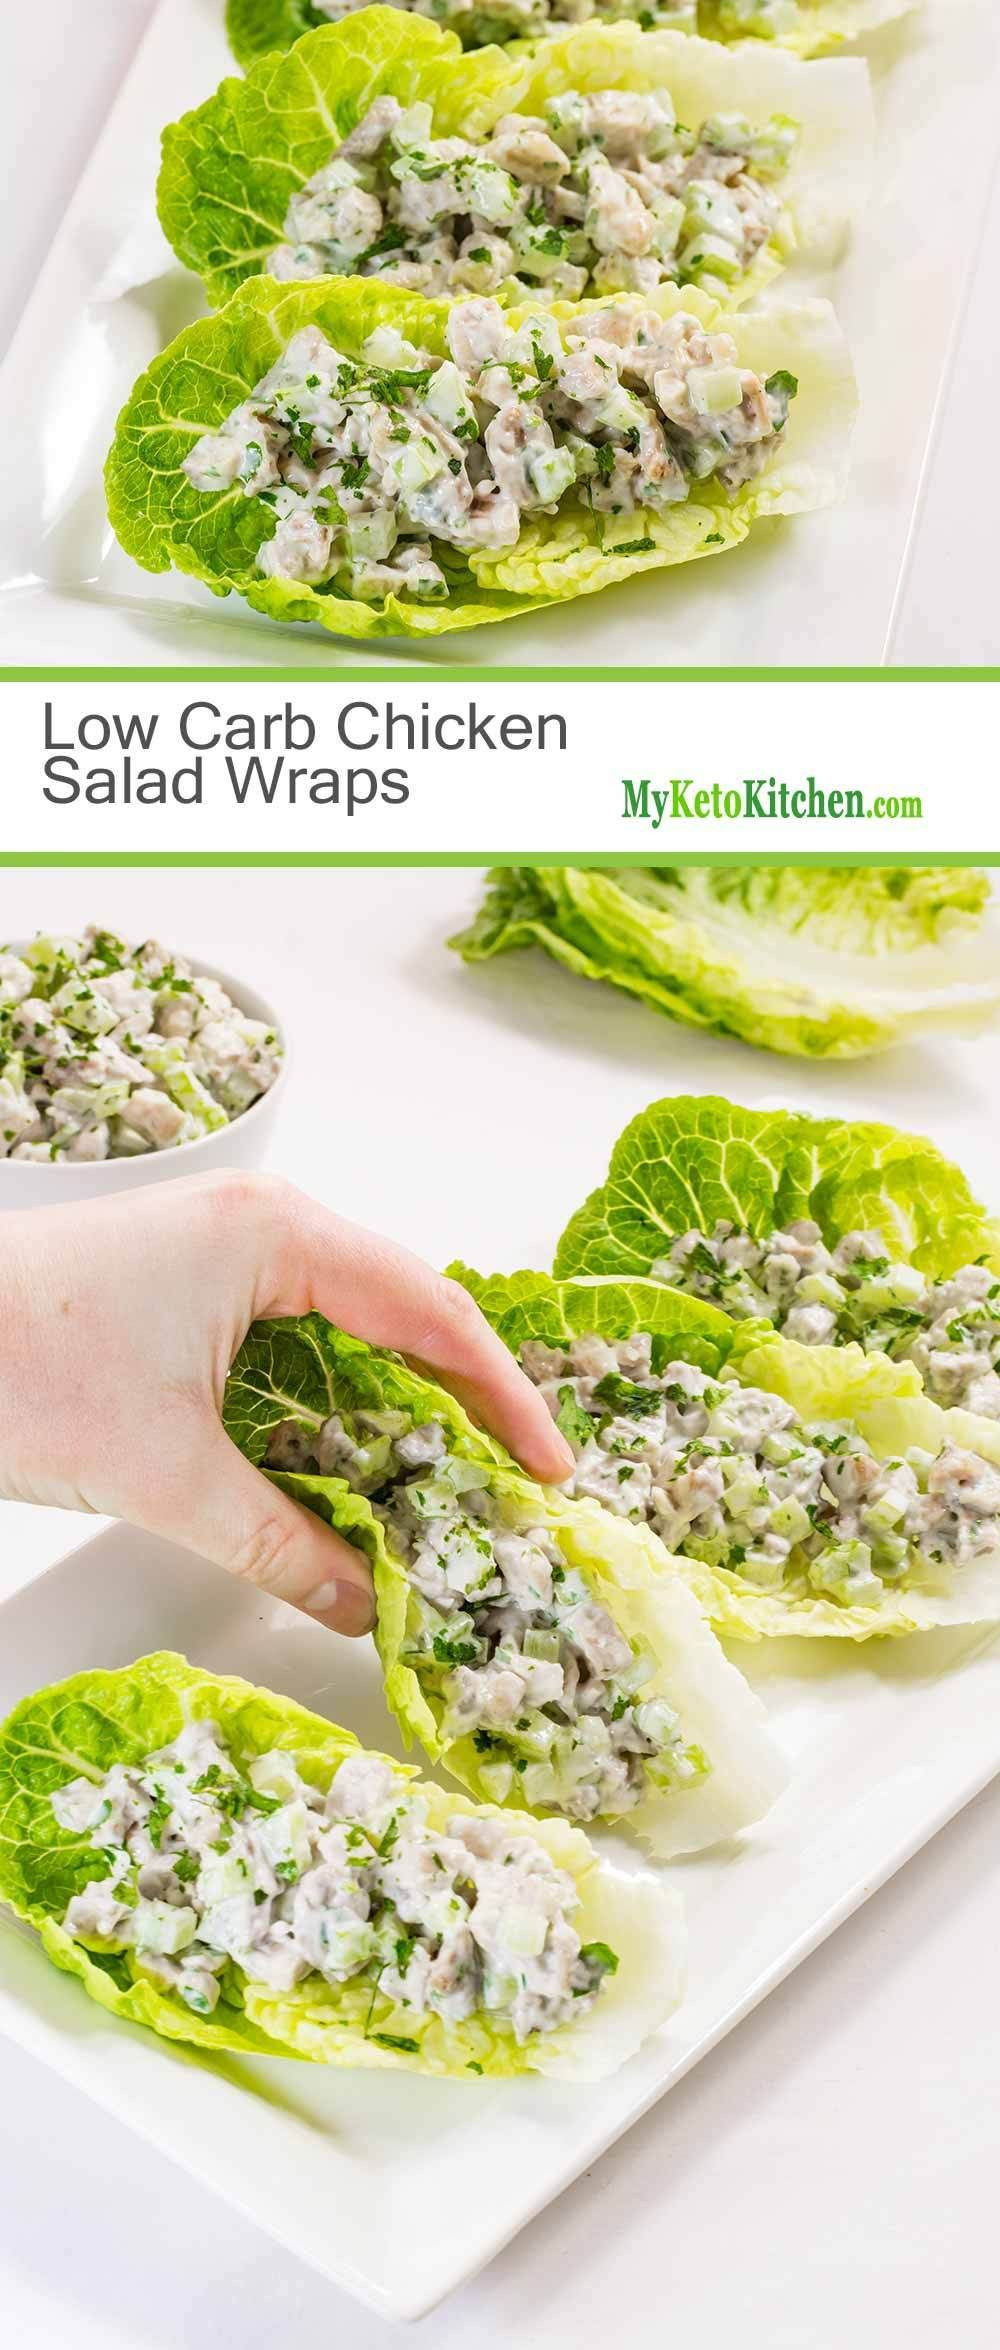 Low Carb Chicken Salad Recipe
 1 Best Keto Chicken Salad Recipe Low Carb " Easy